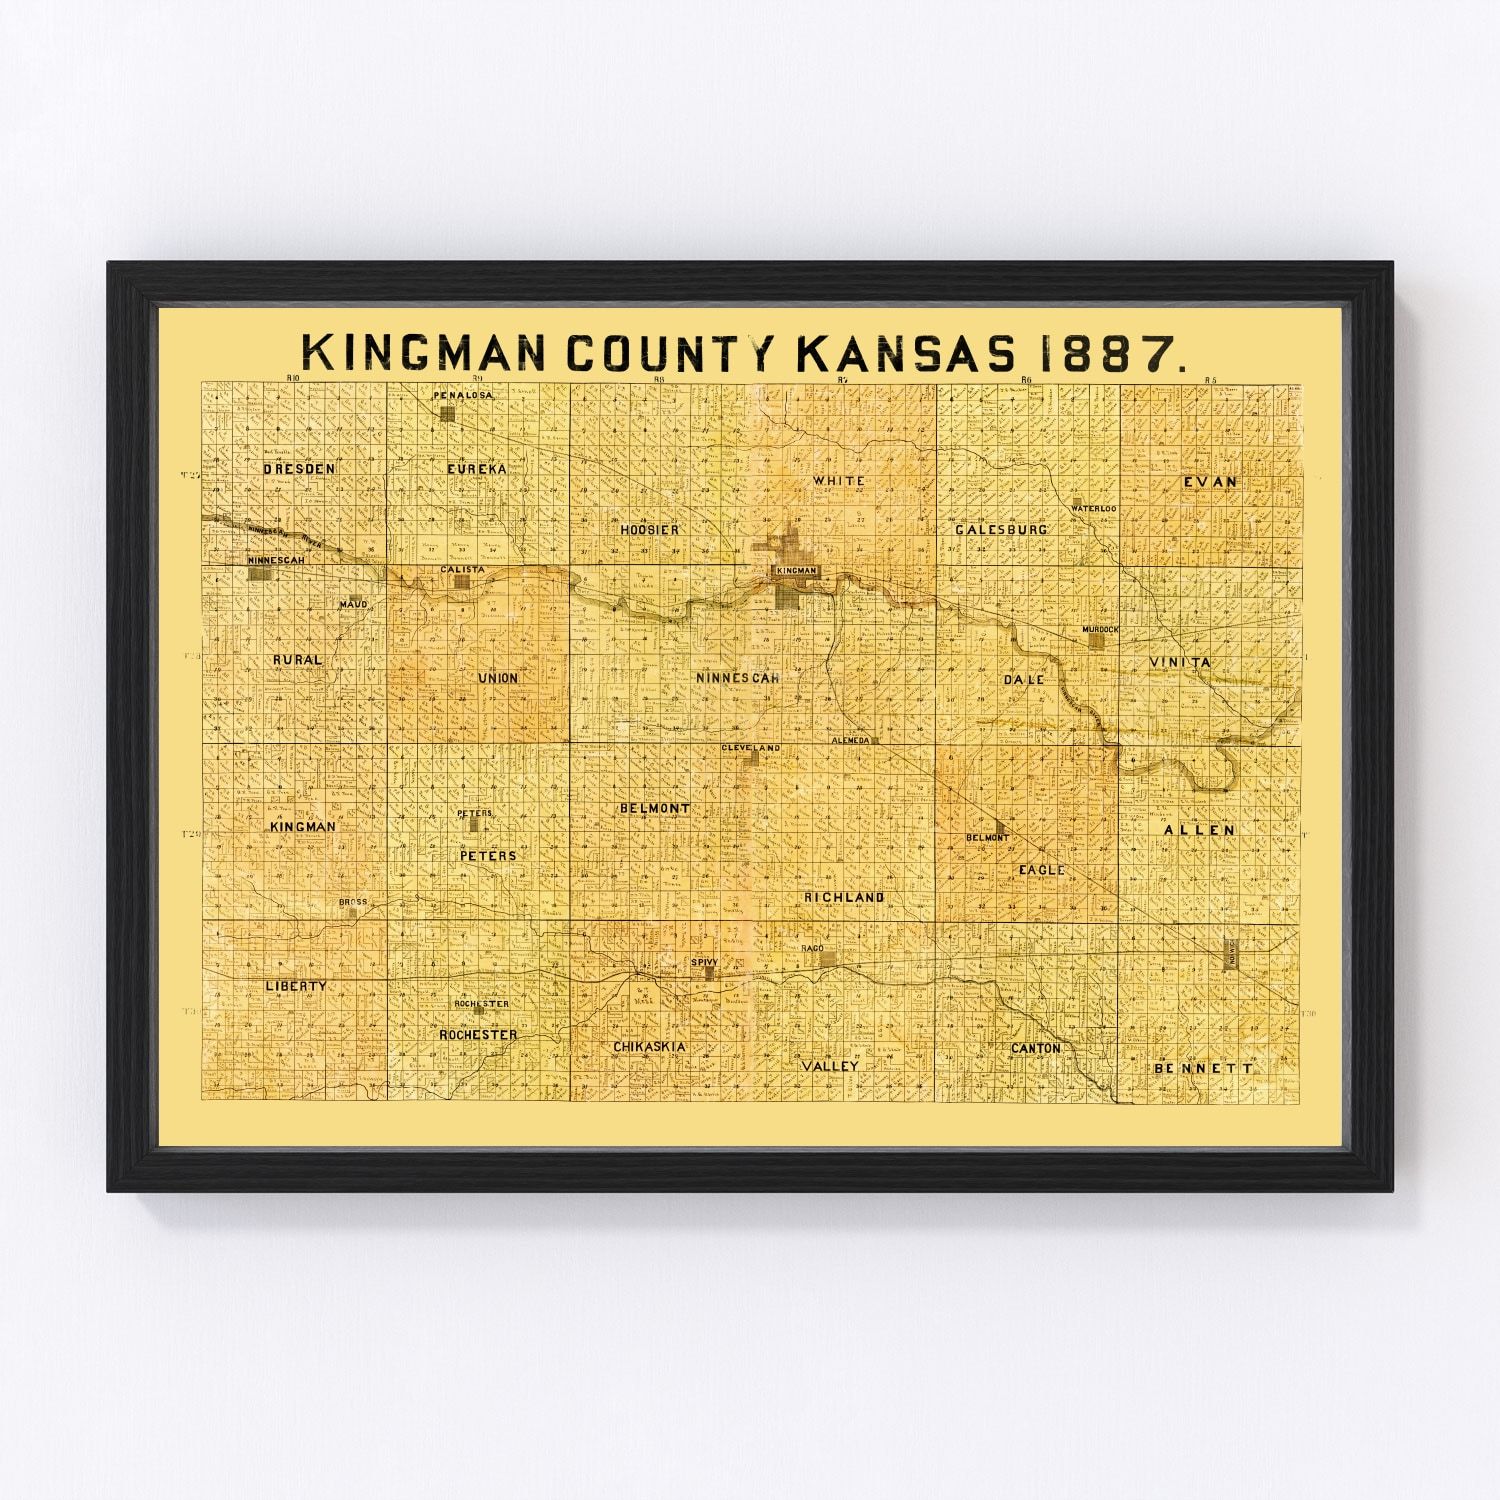 Vintage Map of Kingman County, Kansas 1887